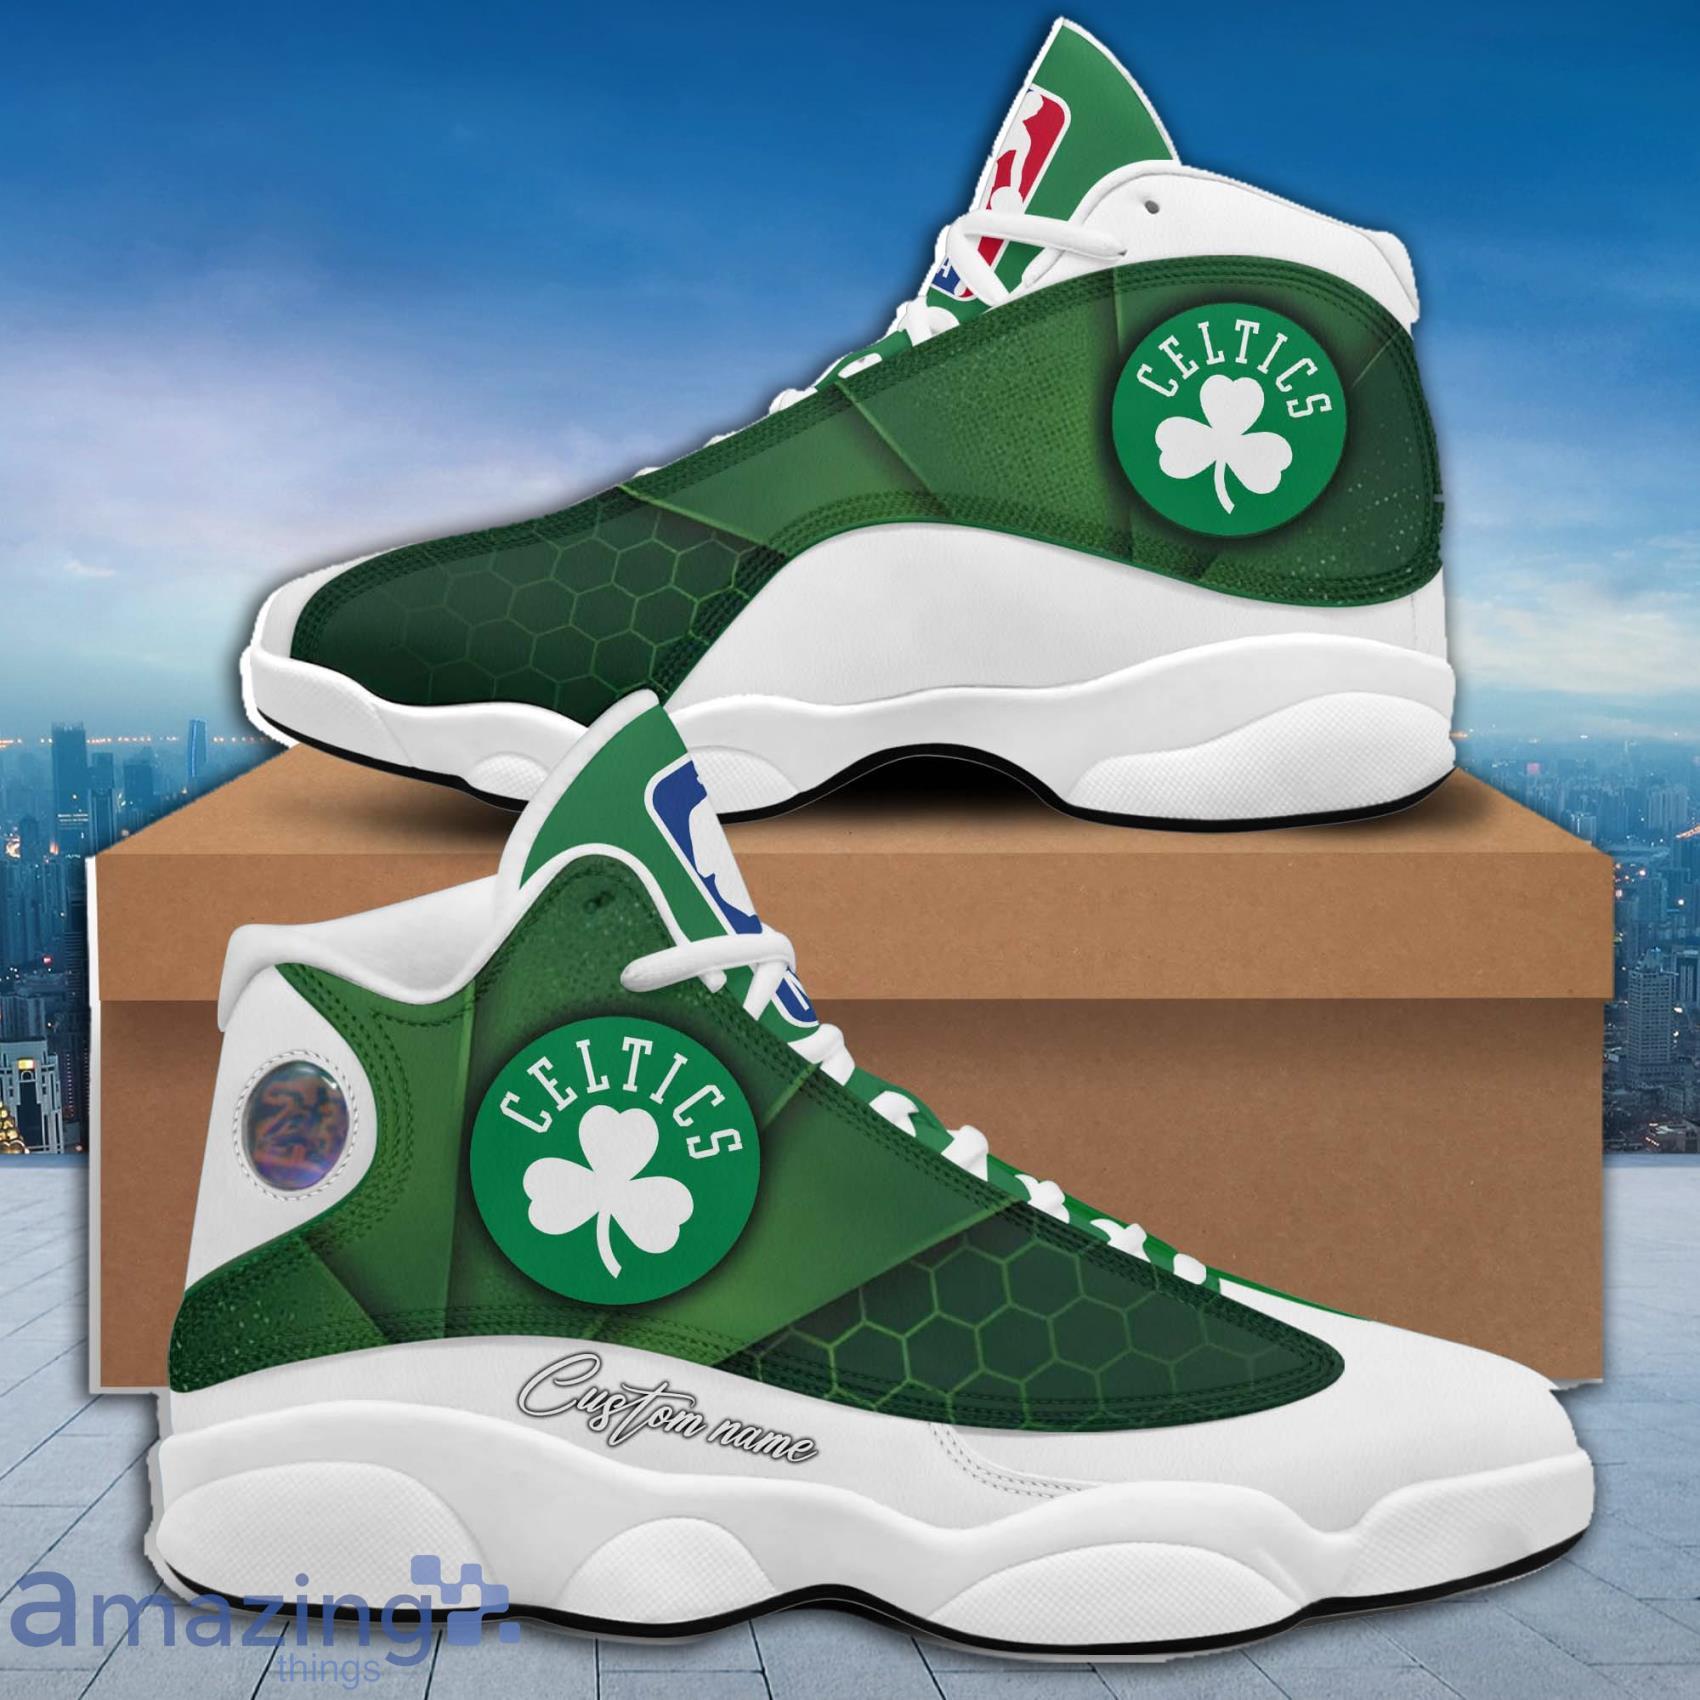 Jayson Tatum Boston Celtics Autographed Fanatics Authentic Player-Worn  Black, Green, and White Jordan Shoes from